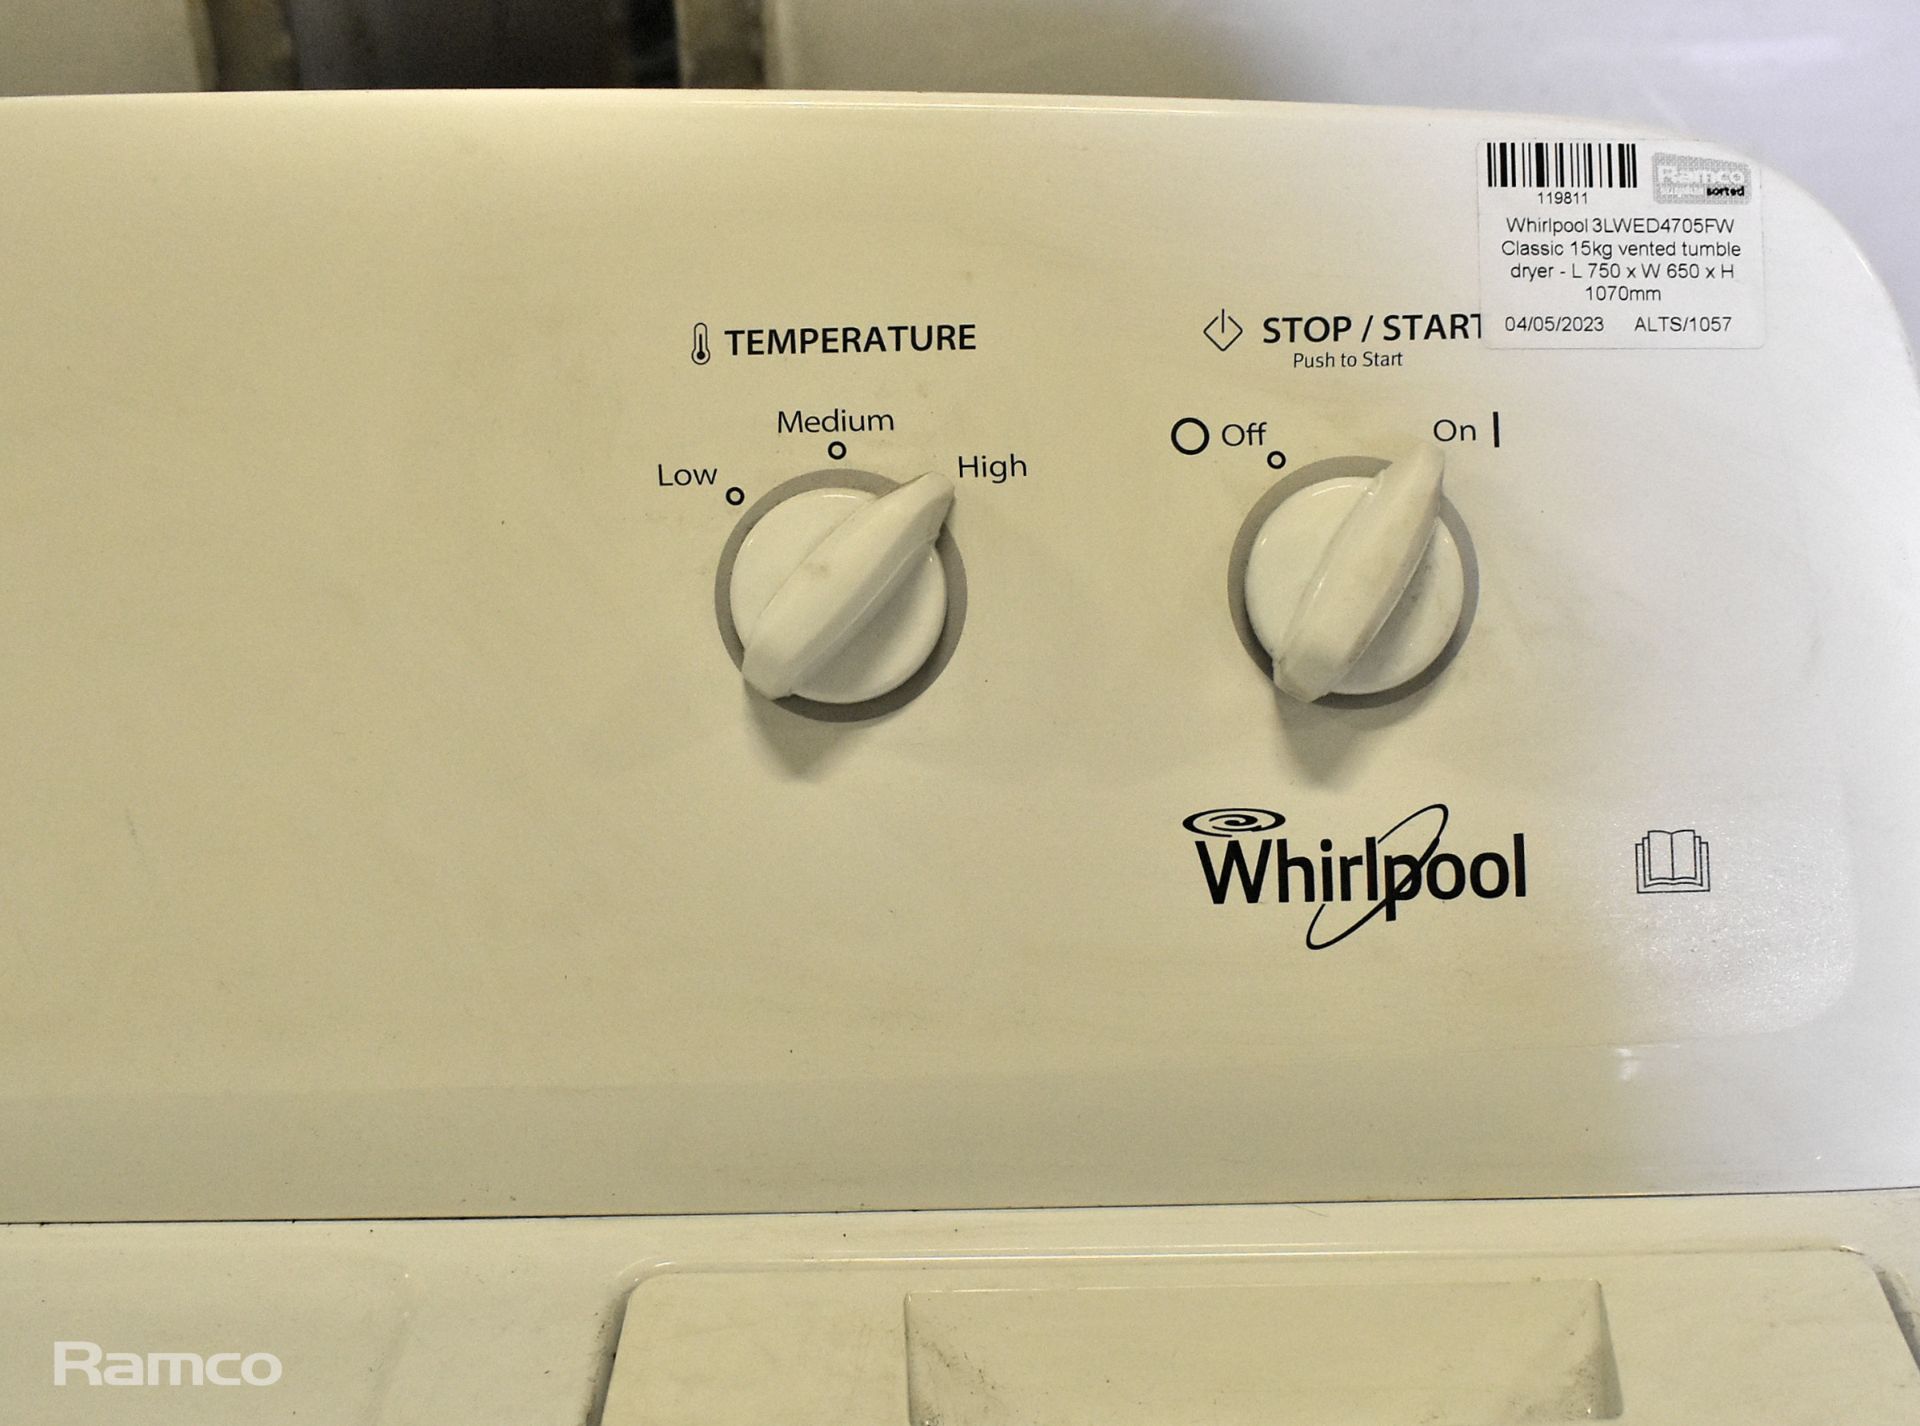 Whirlpool 3LWED4705FW Classic 15kg vented tumble dryer - L 750 x W 650 x H 1070mm - Bild 3 aus 5